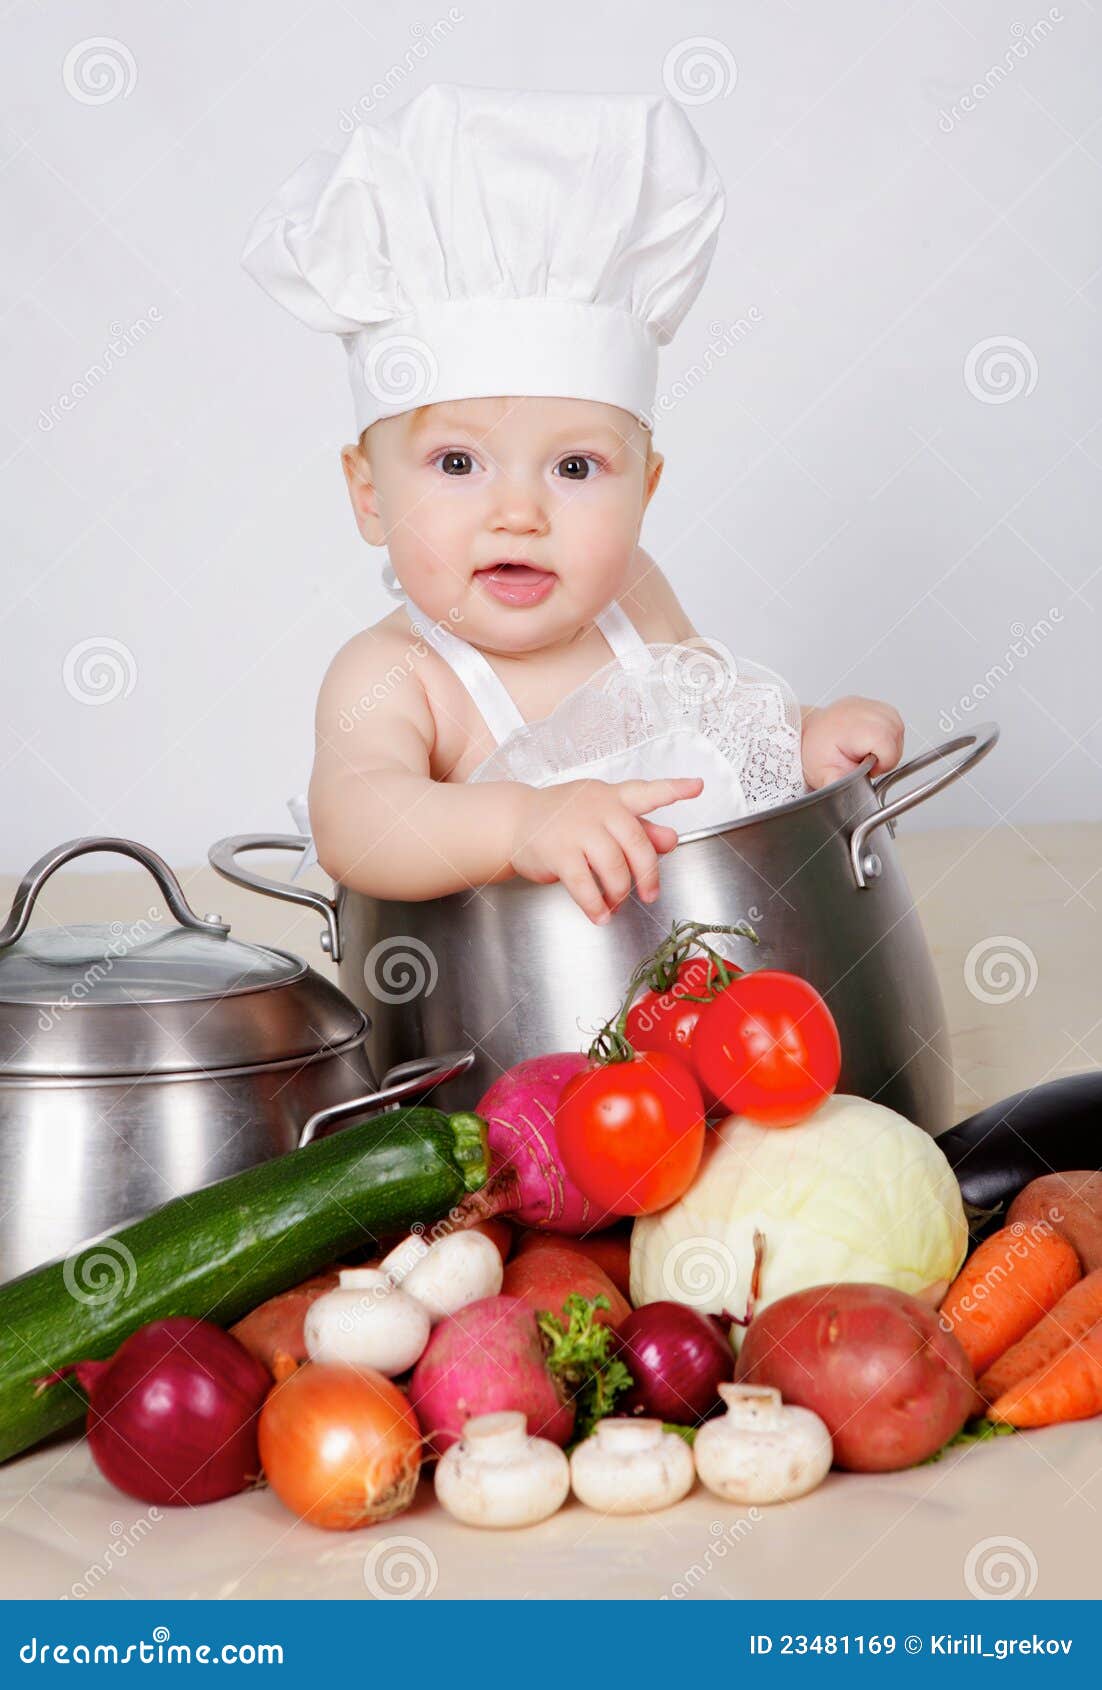 صور الاطفال Baby-cook-23481169